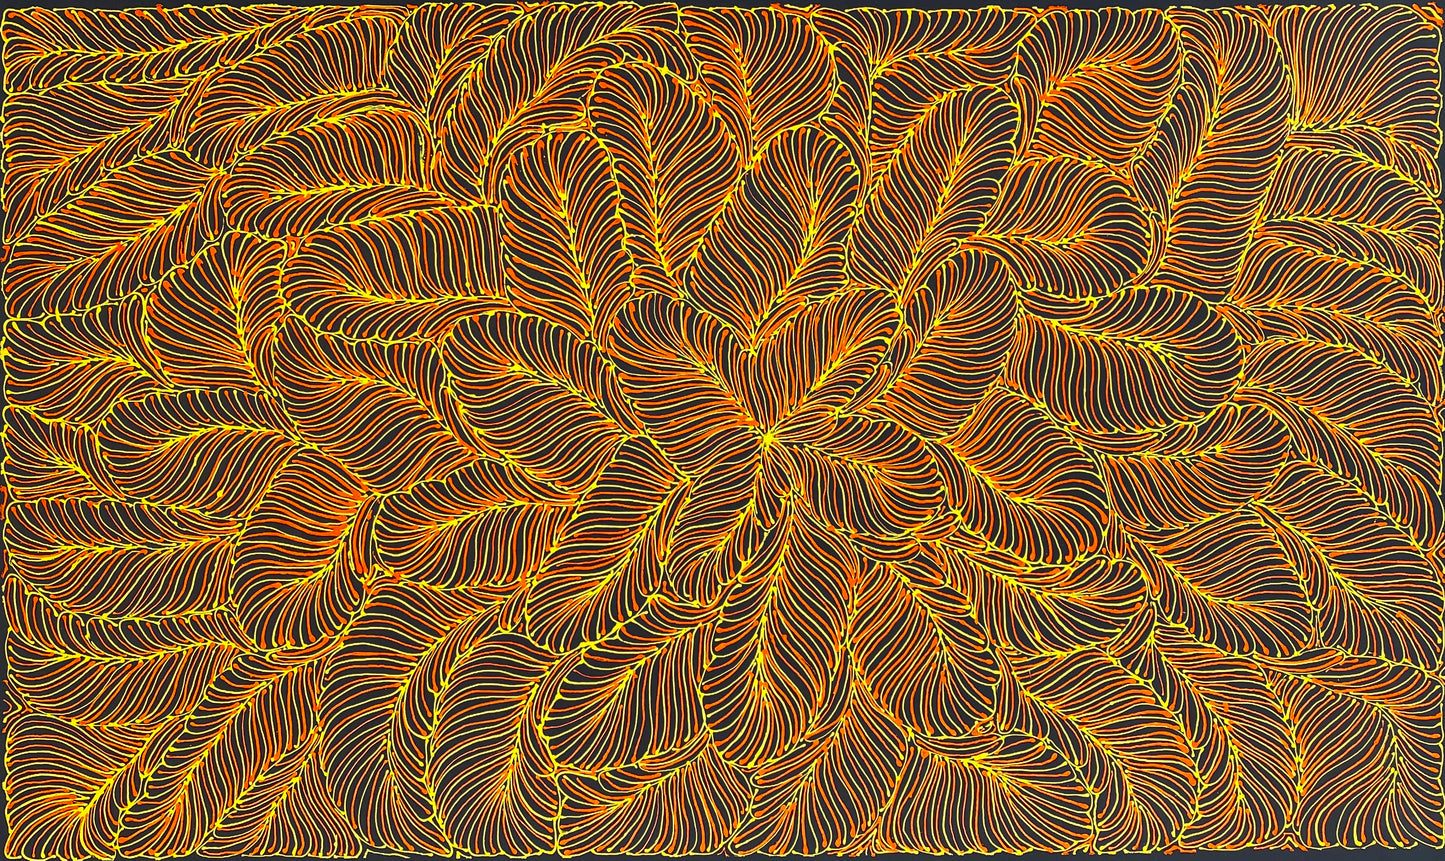 Rosemary Pitjara Petyarre Bush Yam Leaves Indigneous Art Australian Art Aboriginal Art Leaves Utopia Yellow Orange